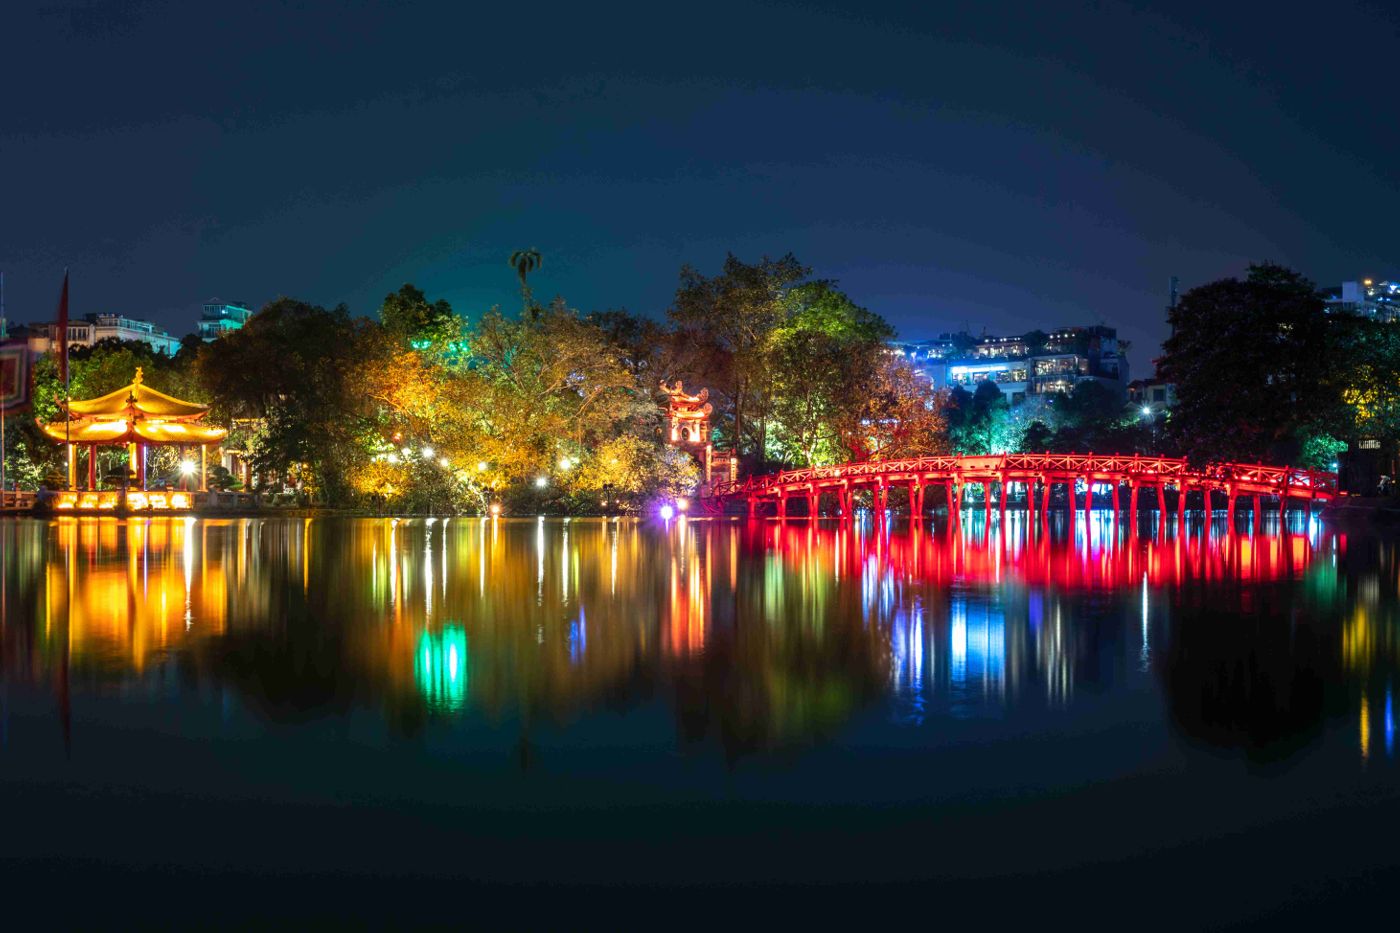 Hoan Kiem Lake – Ngoc Son Temple, Hanoi